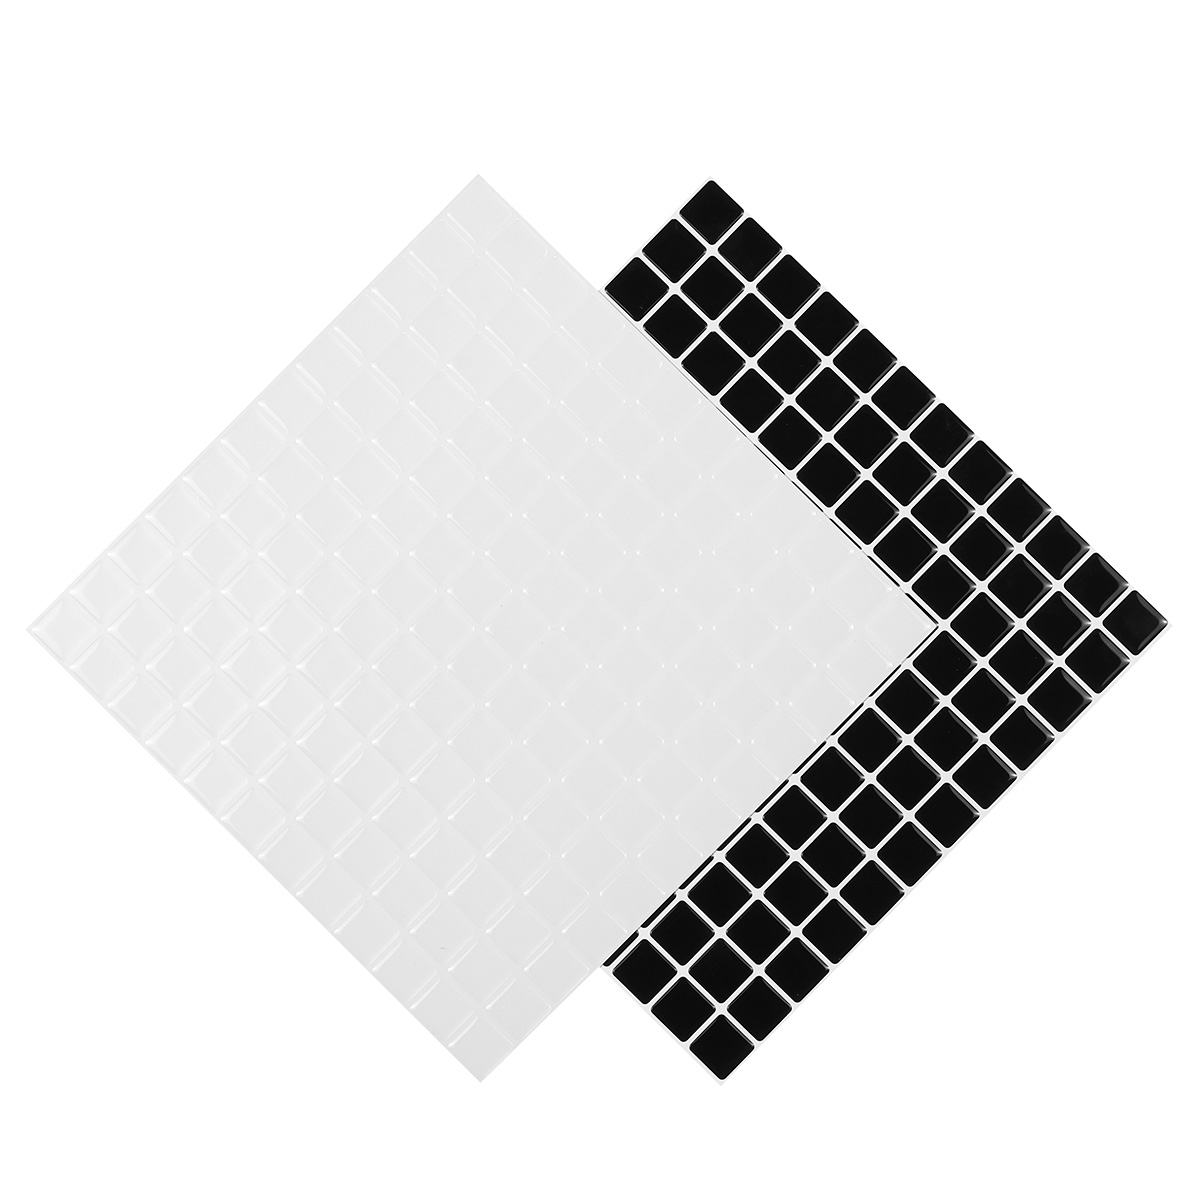 3D-Mosaics-Waterproof-and-Oil-proof-Black-and-White-Crystal-Epoxy-Three-dimensional-Self-adhesive-Wa-1824203-6